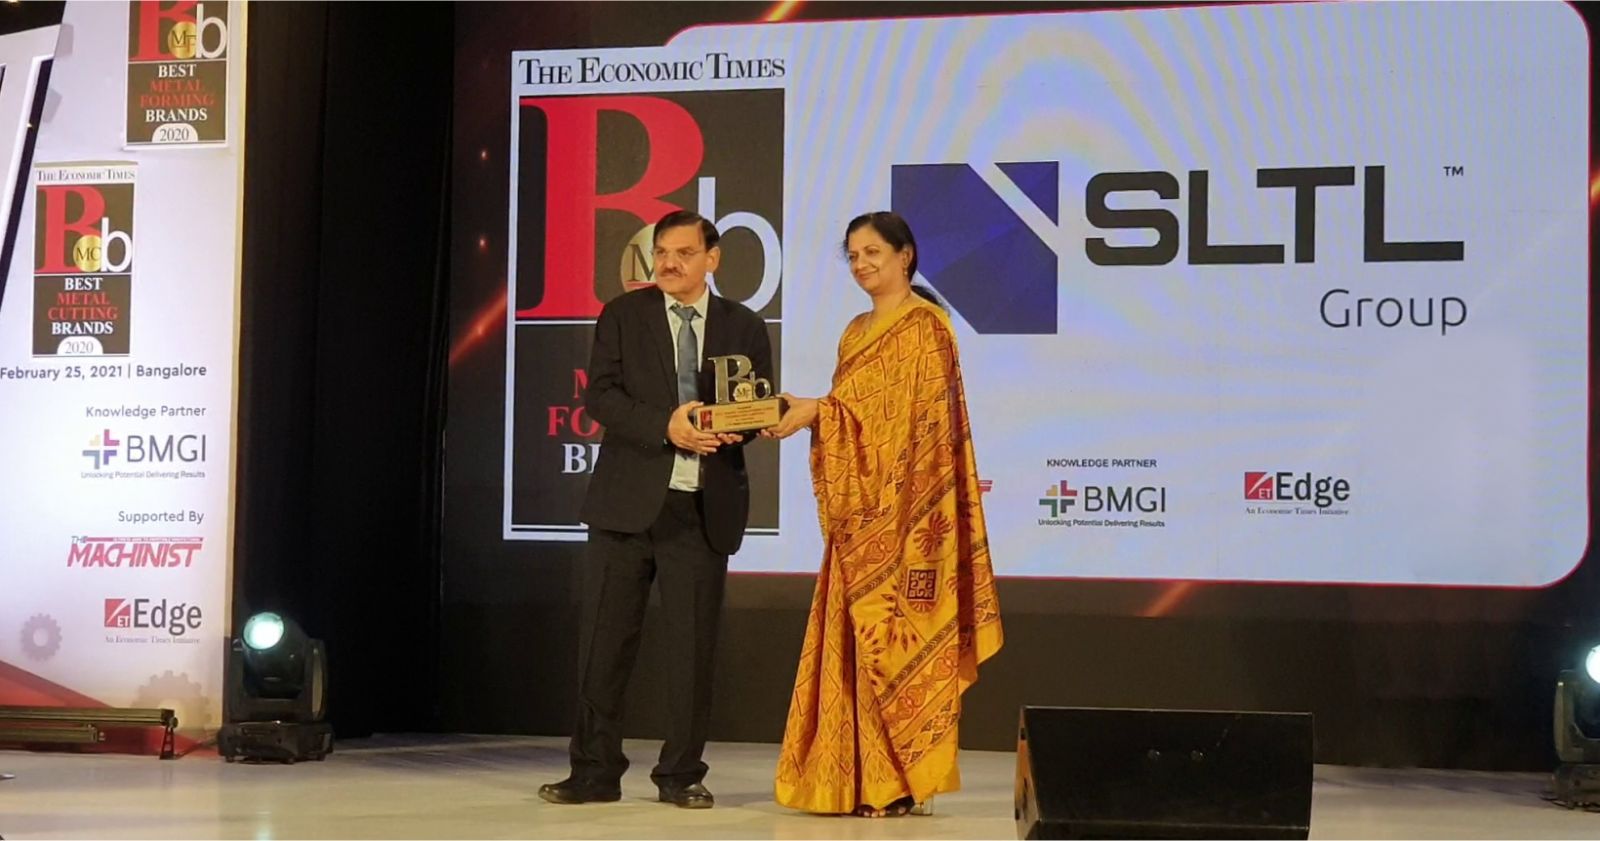 Best Brand Award by ET Economic Times